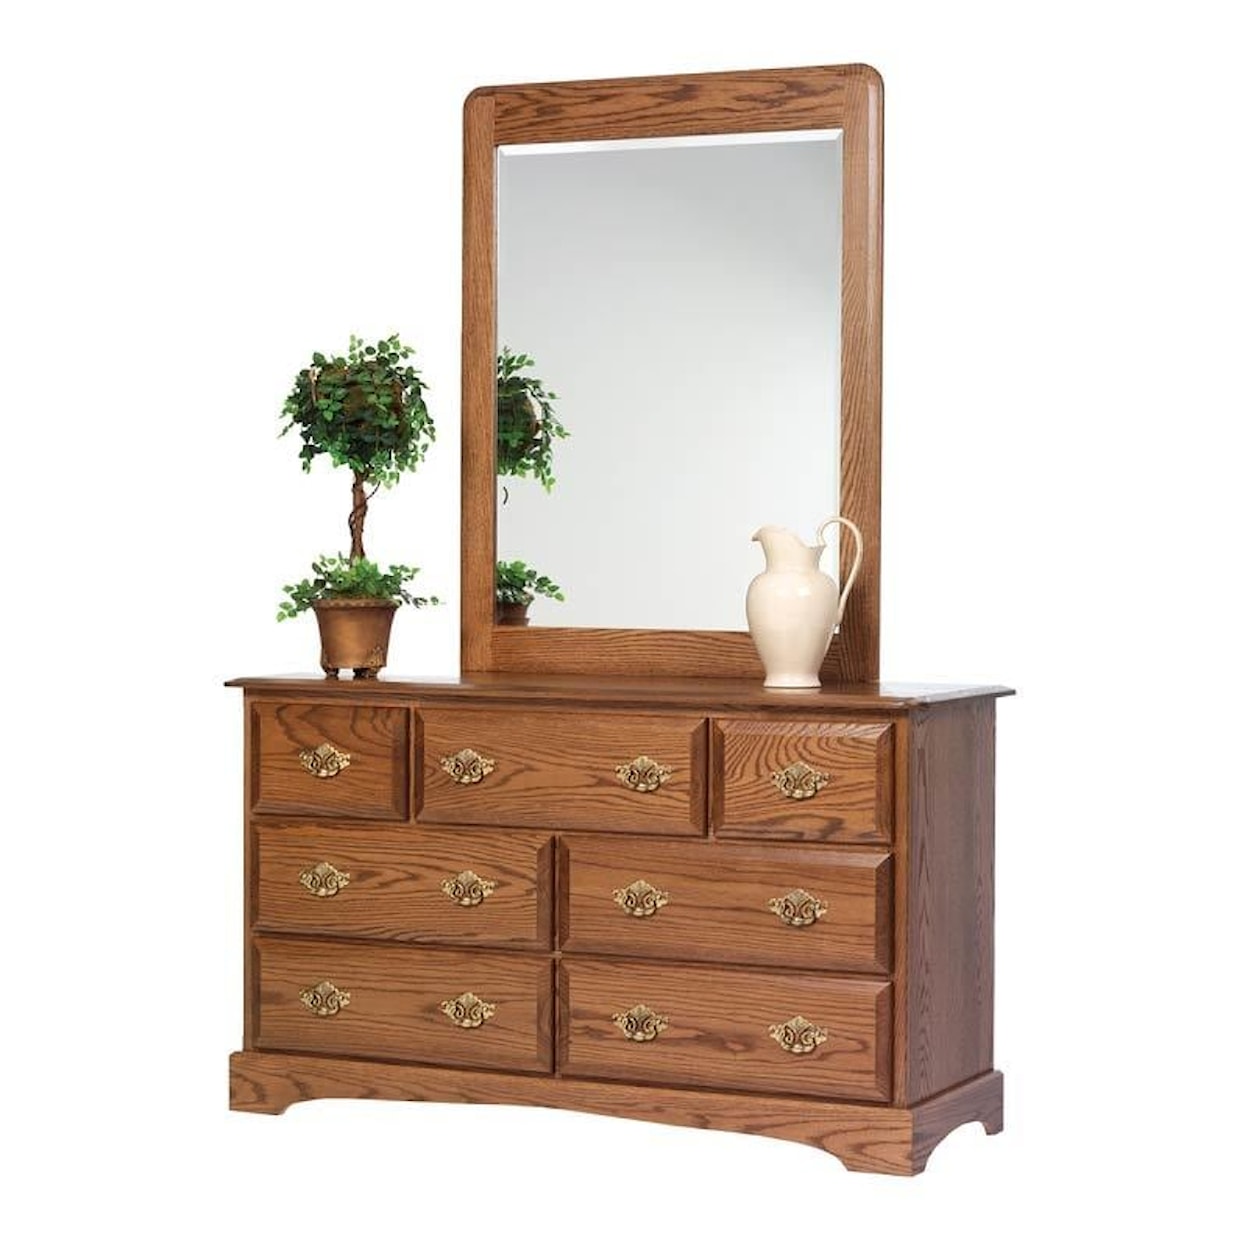 Millcraft Sierra Classic Dresser and Mirror Bedroom Set